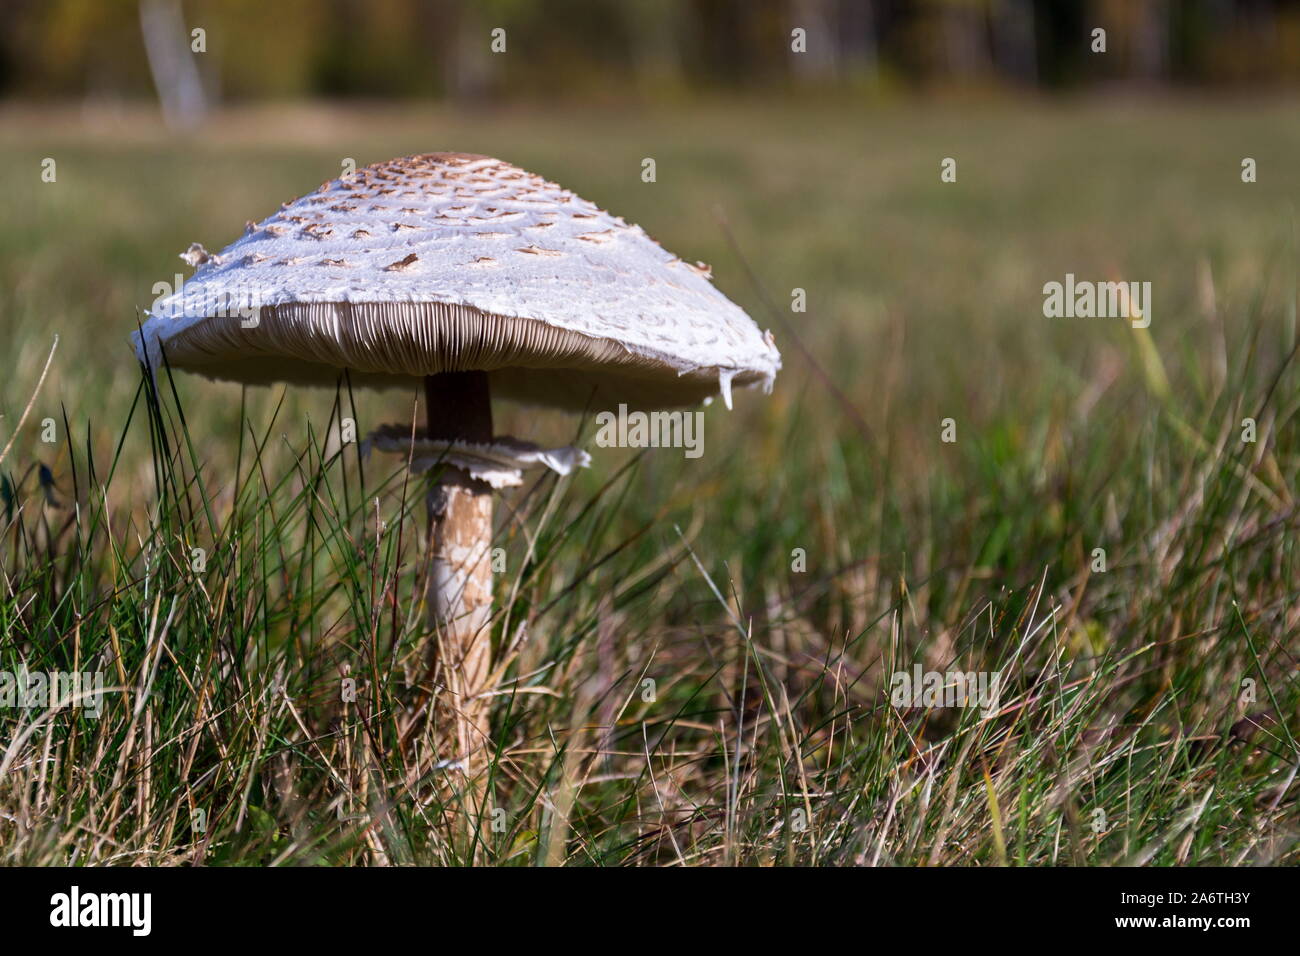 Parasol mushroom, macrolepiota procera fungus in green grass on sunny autumn day, copy space Stock Photo